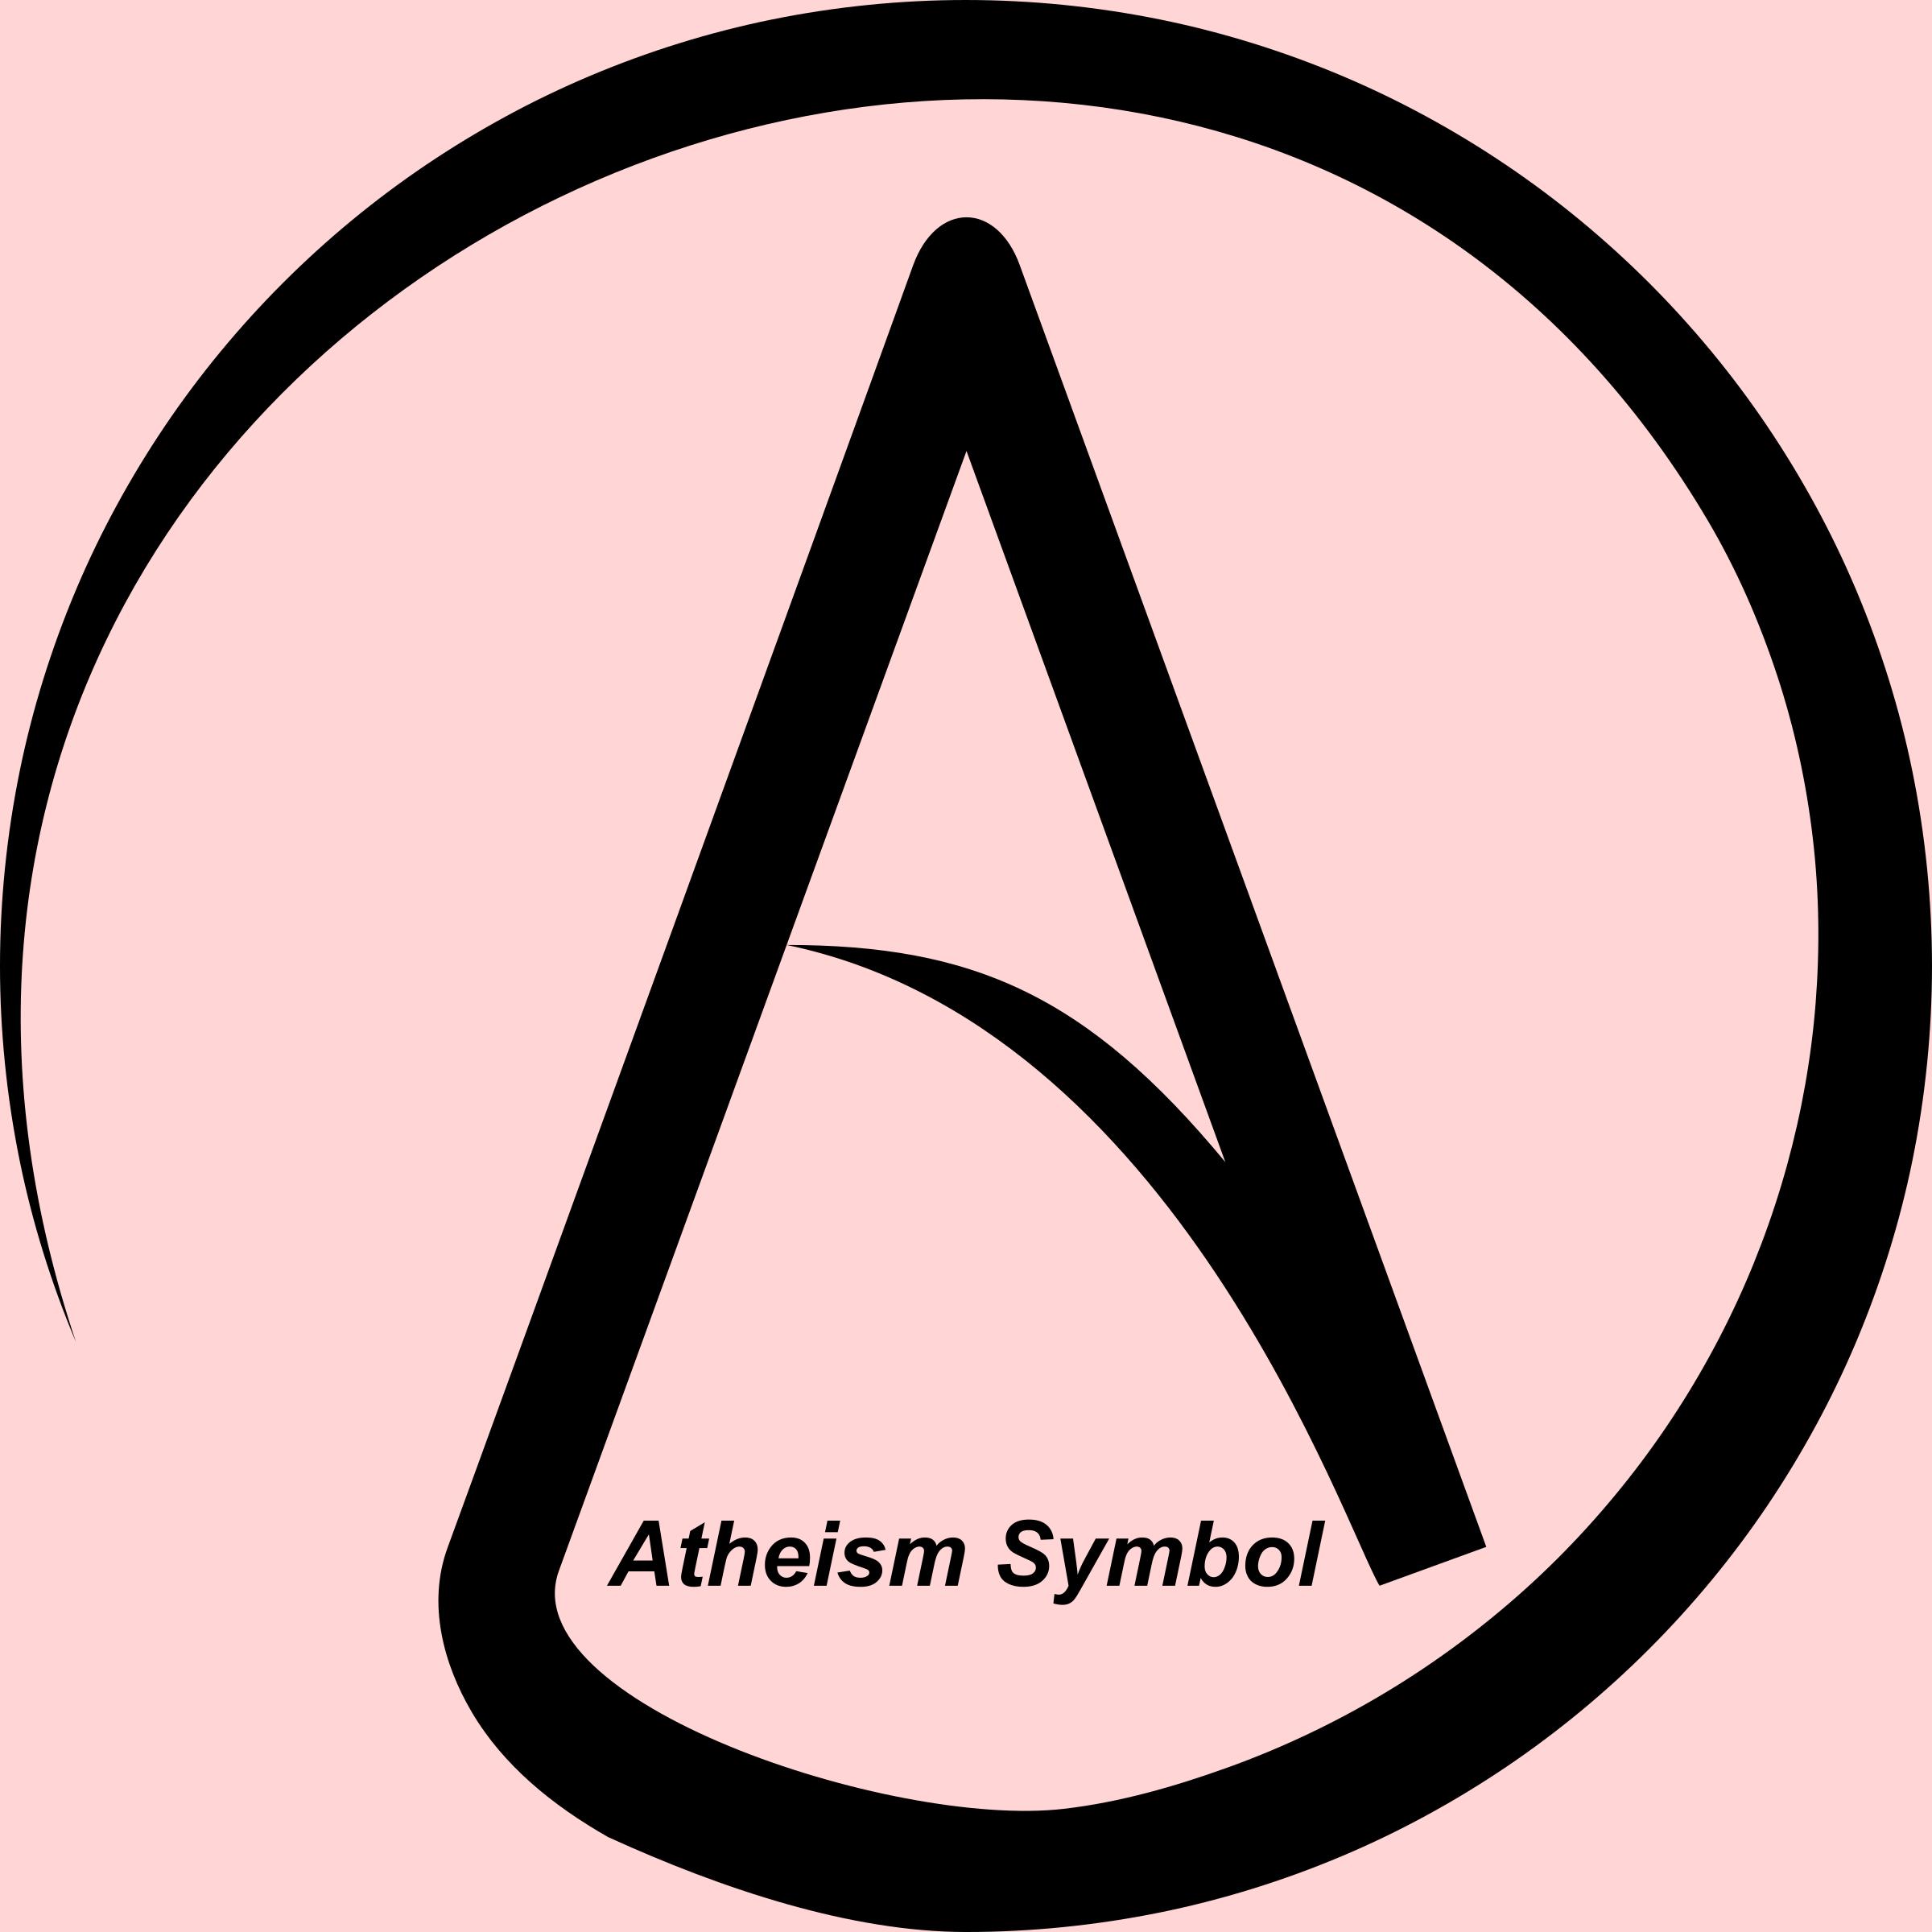 Atheism Symbol (A in Circle) png